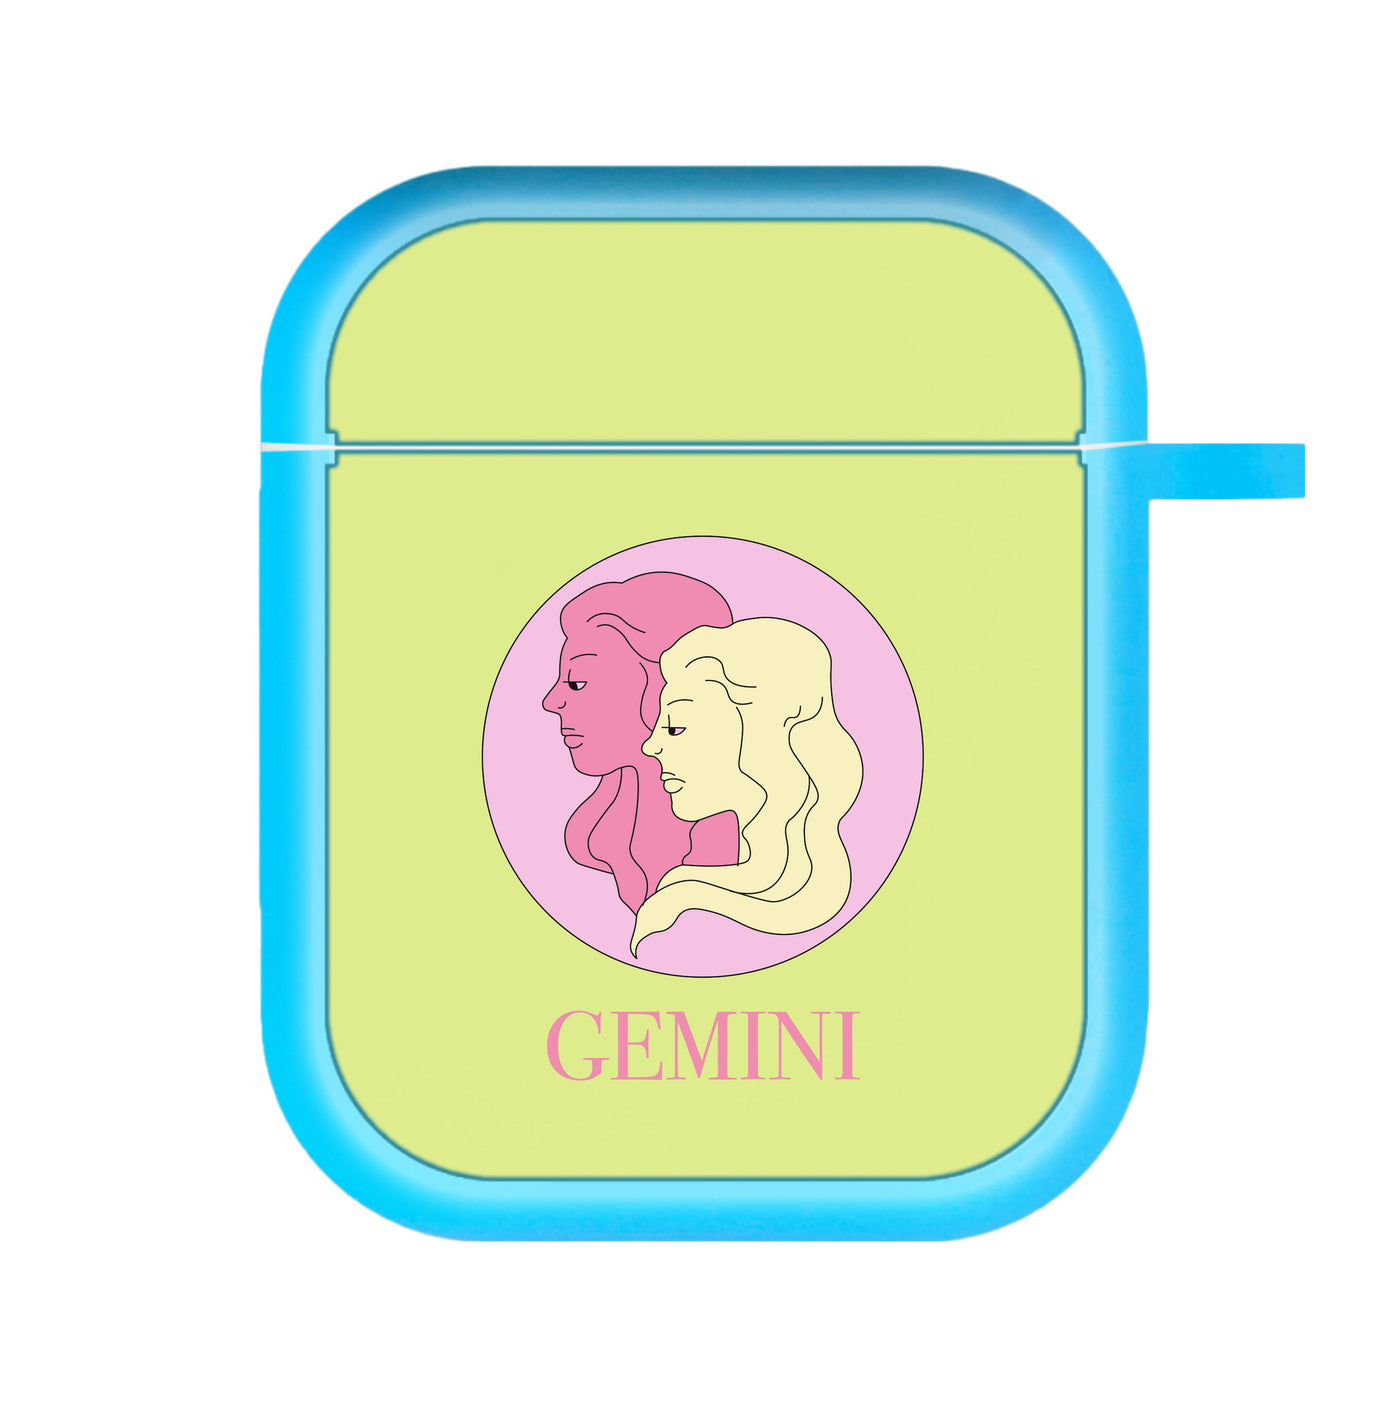 Gemini - Tarot Cards AirPods Case